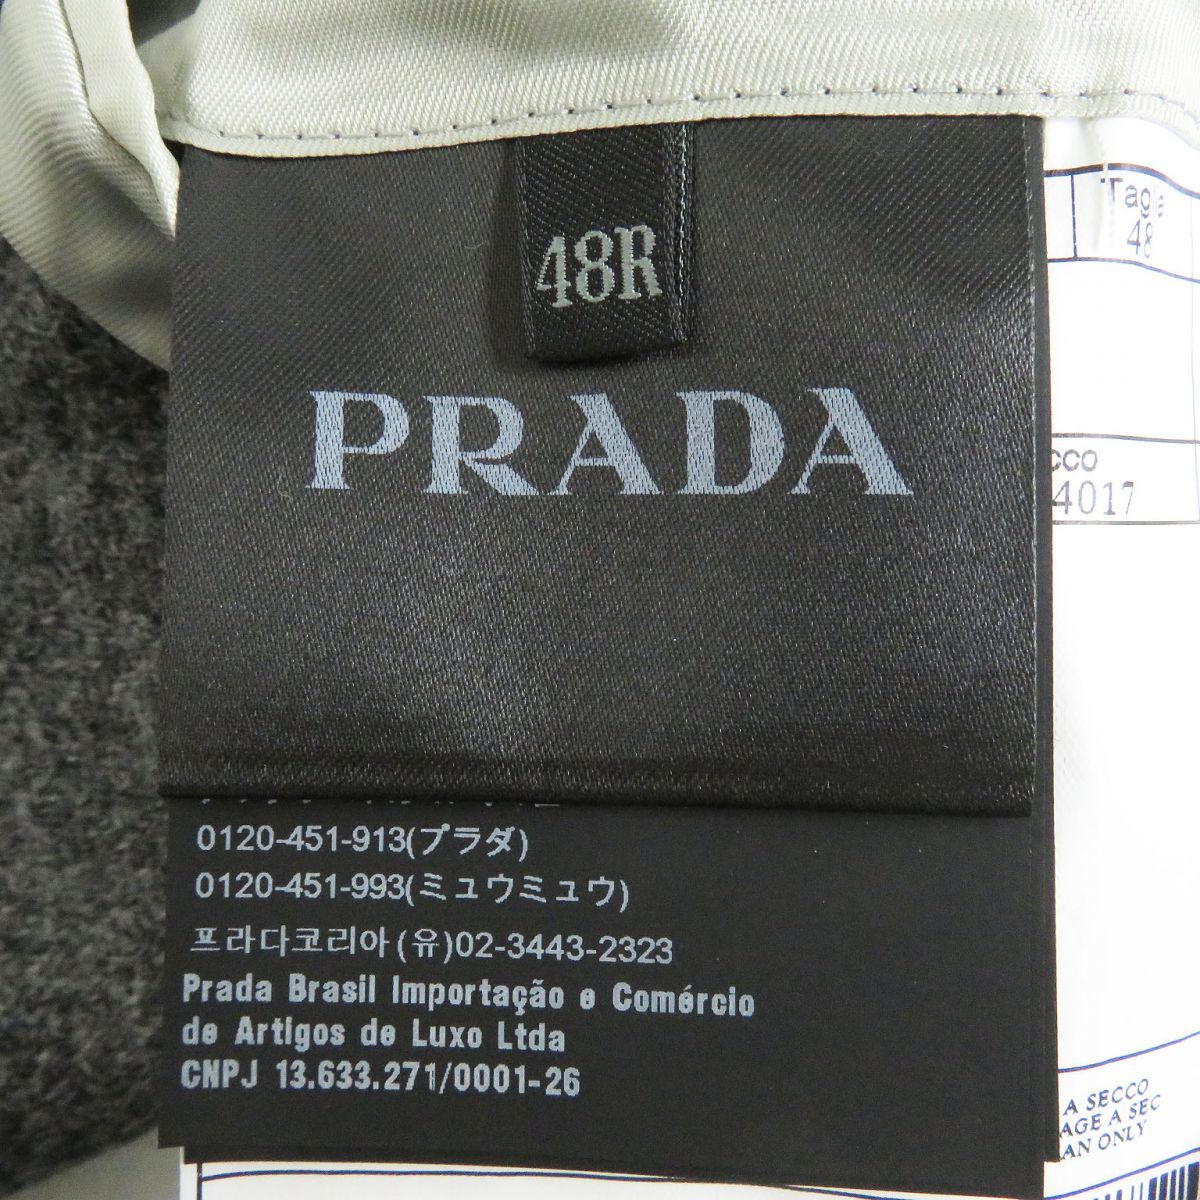  ultimate beautiful goods *2018 year made PRADA/ Prada wool 100% single jacket / tailored jacket / blaser gray 48 Italy made regular goods men's 